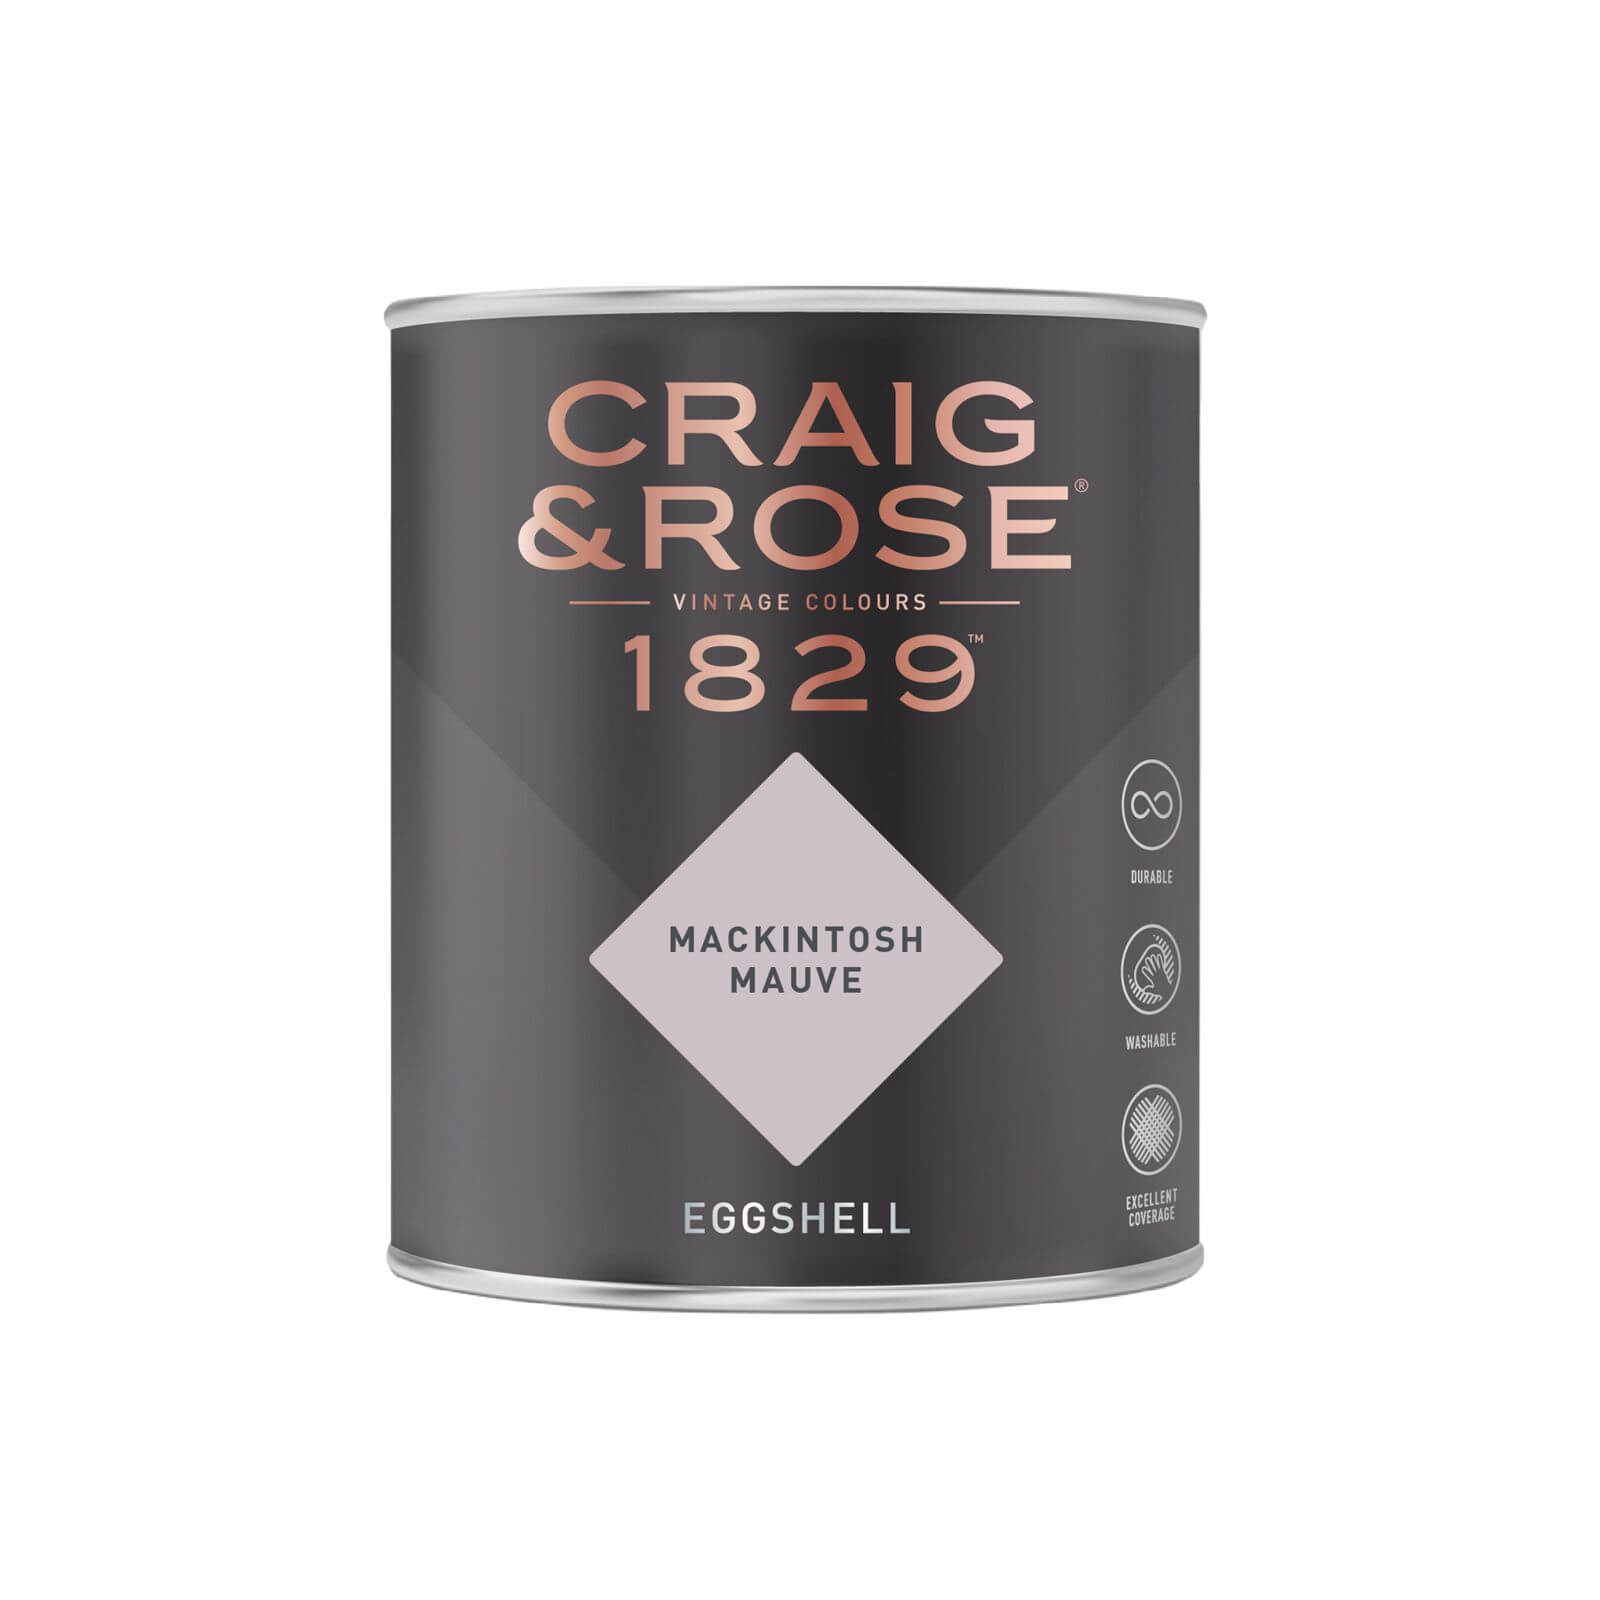 Craig & Rose 1829 Eggshell Paint Mackintosh Mauve - 750ml